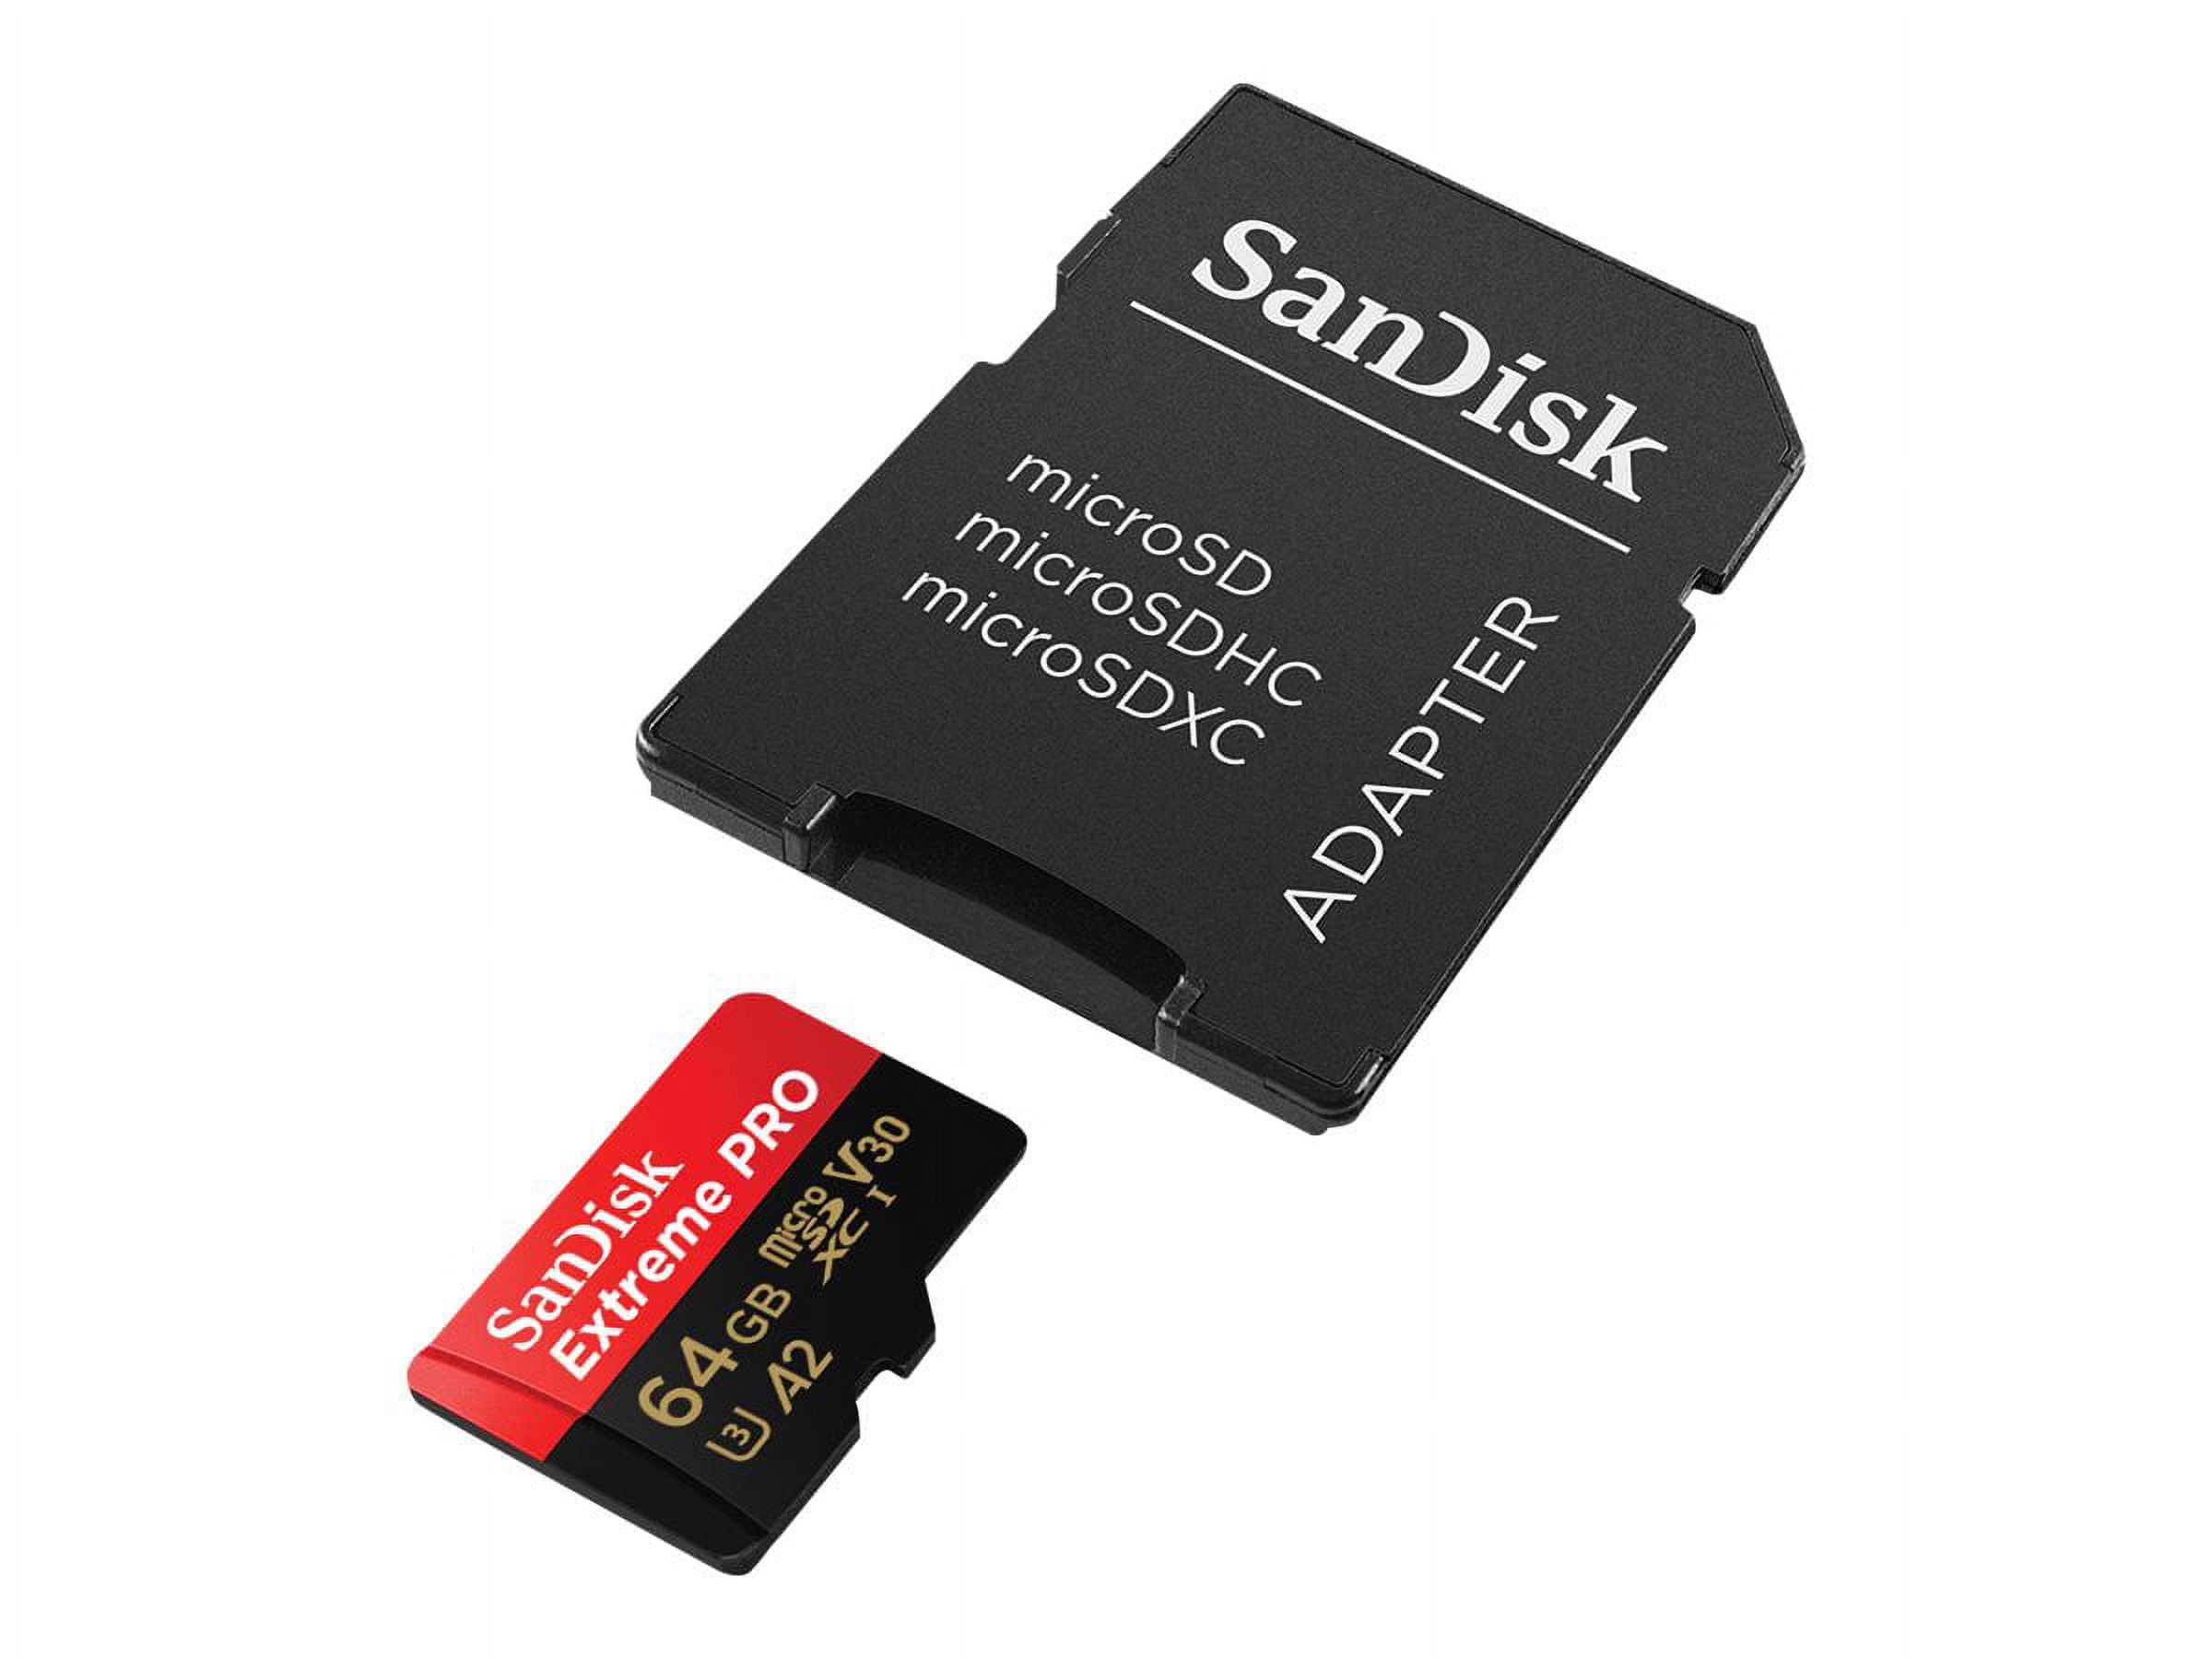 SanDisk 512GB Extreme Pro microSDXC UHS-I Memory Card - SDSQXCD